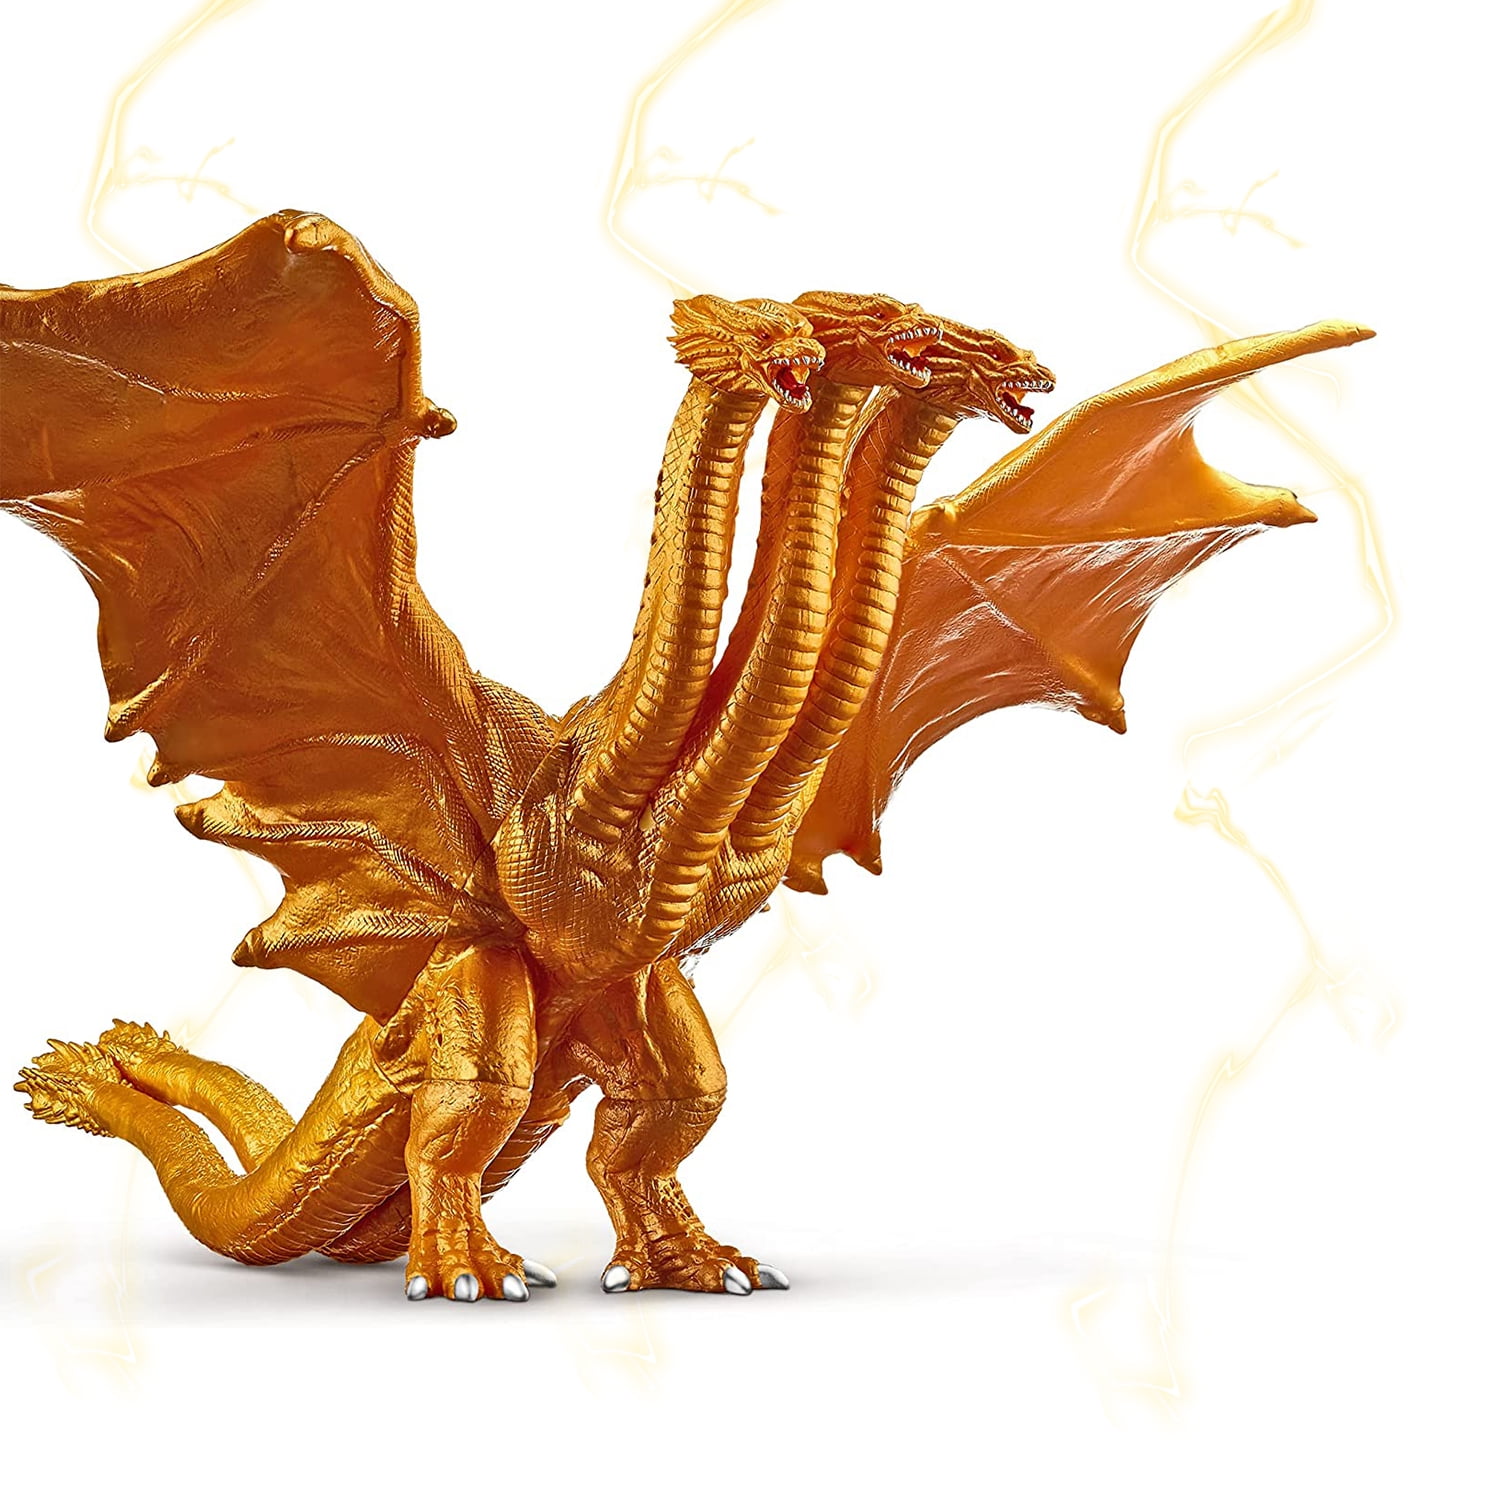 Details about   Godzilla Ghidorah Vinyl toys model 